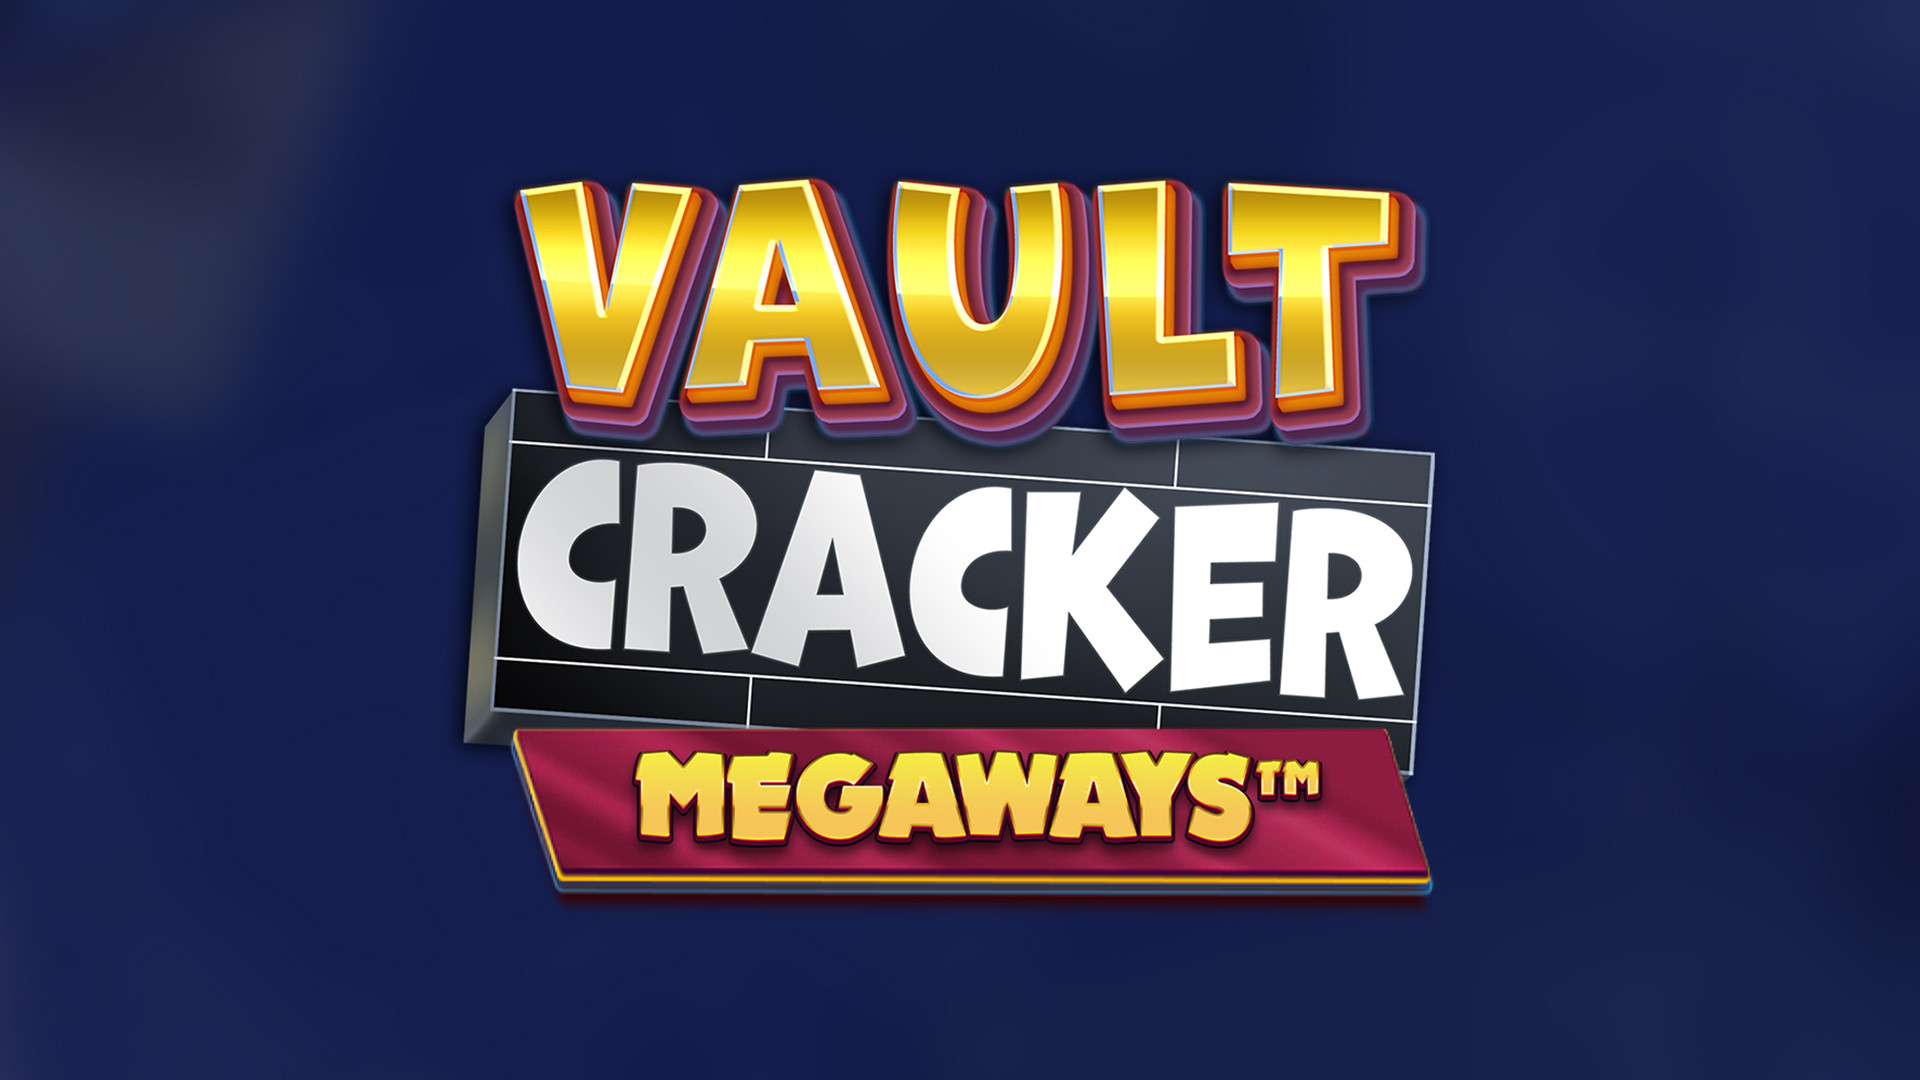 Vault Cracker MEGAWAYS